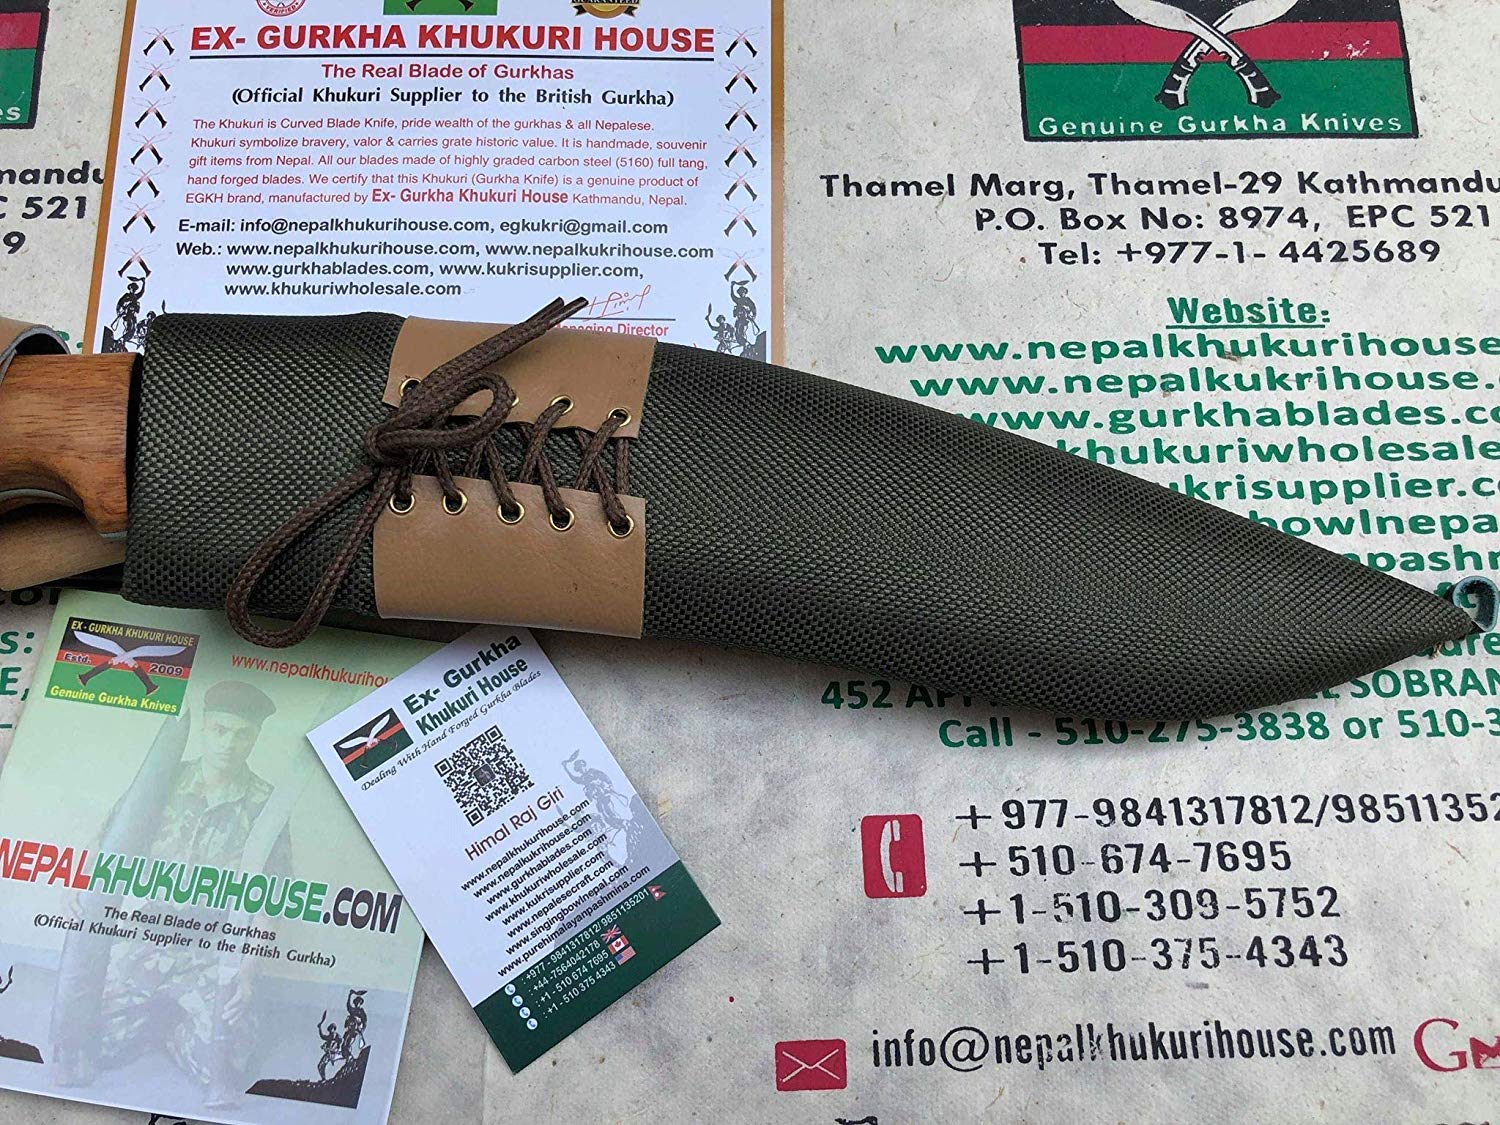 Traditional Gurkha Afghan Issue Camouflage Waterproof Sheath-9949